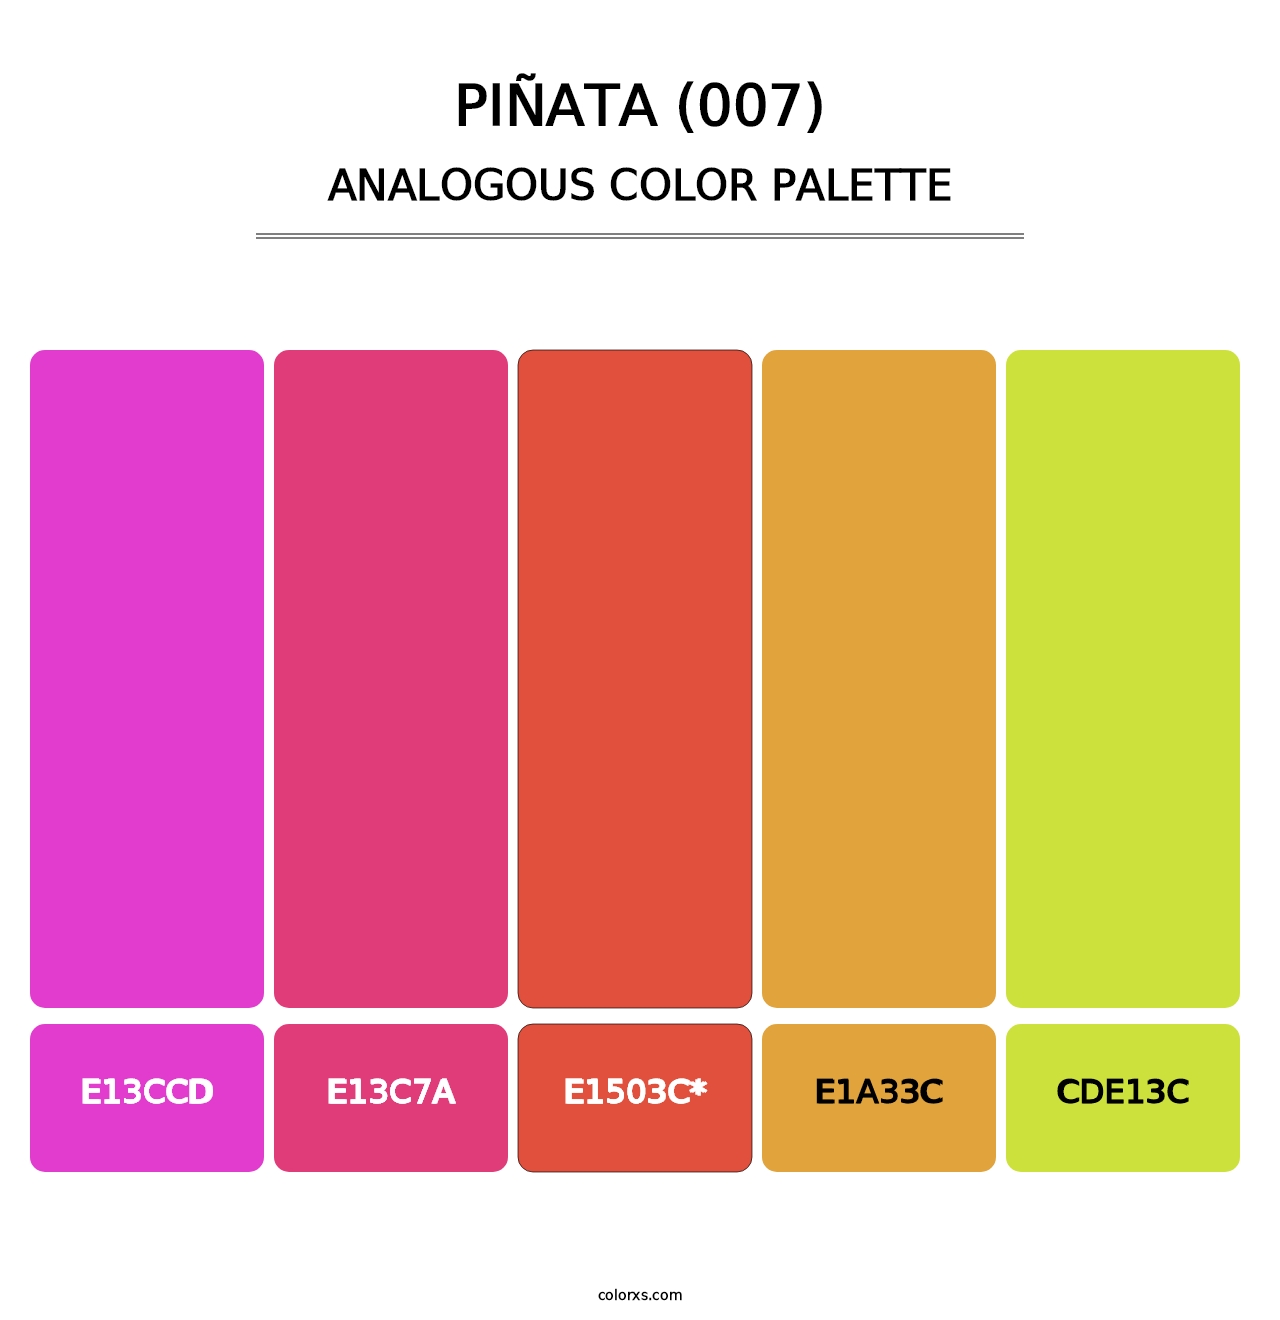 Piñata (007) - Analogous Color Palette